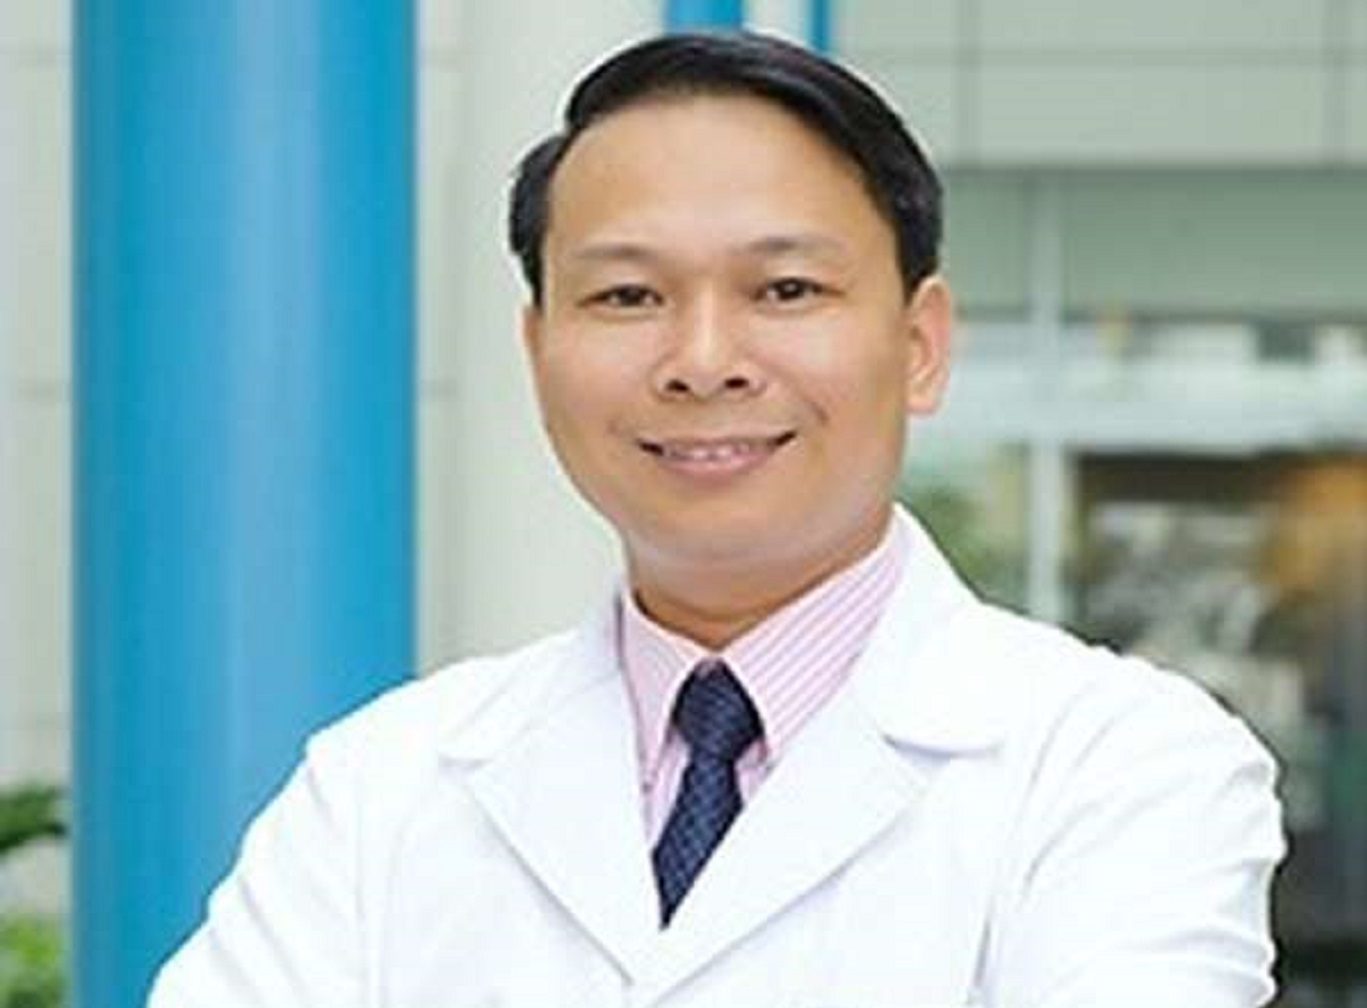 Pham Duc Luong, MD